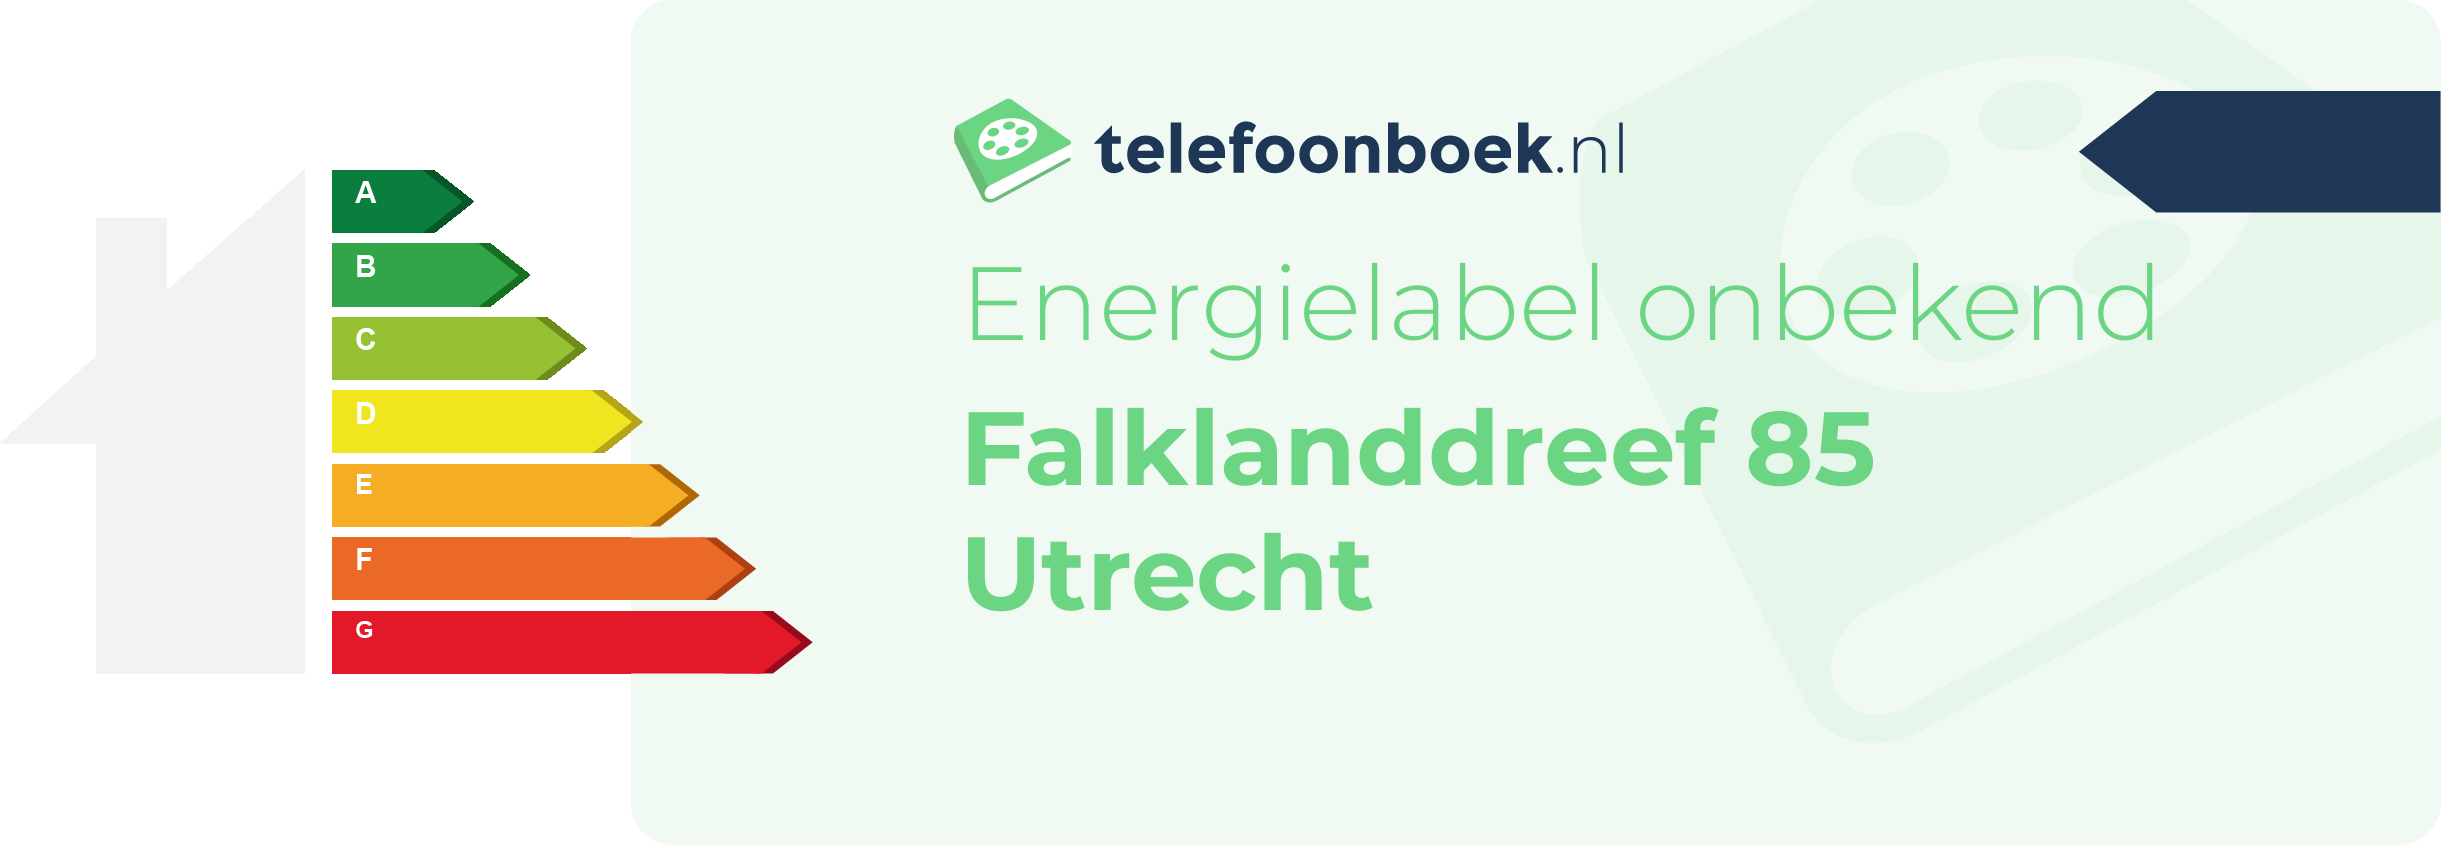 Energielabel Falklanddreef 85 Utrecht